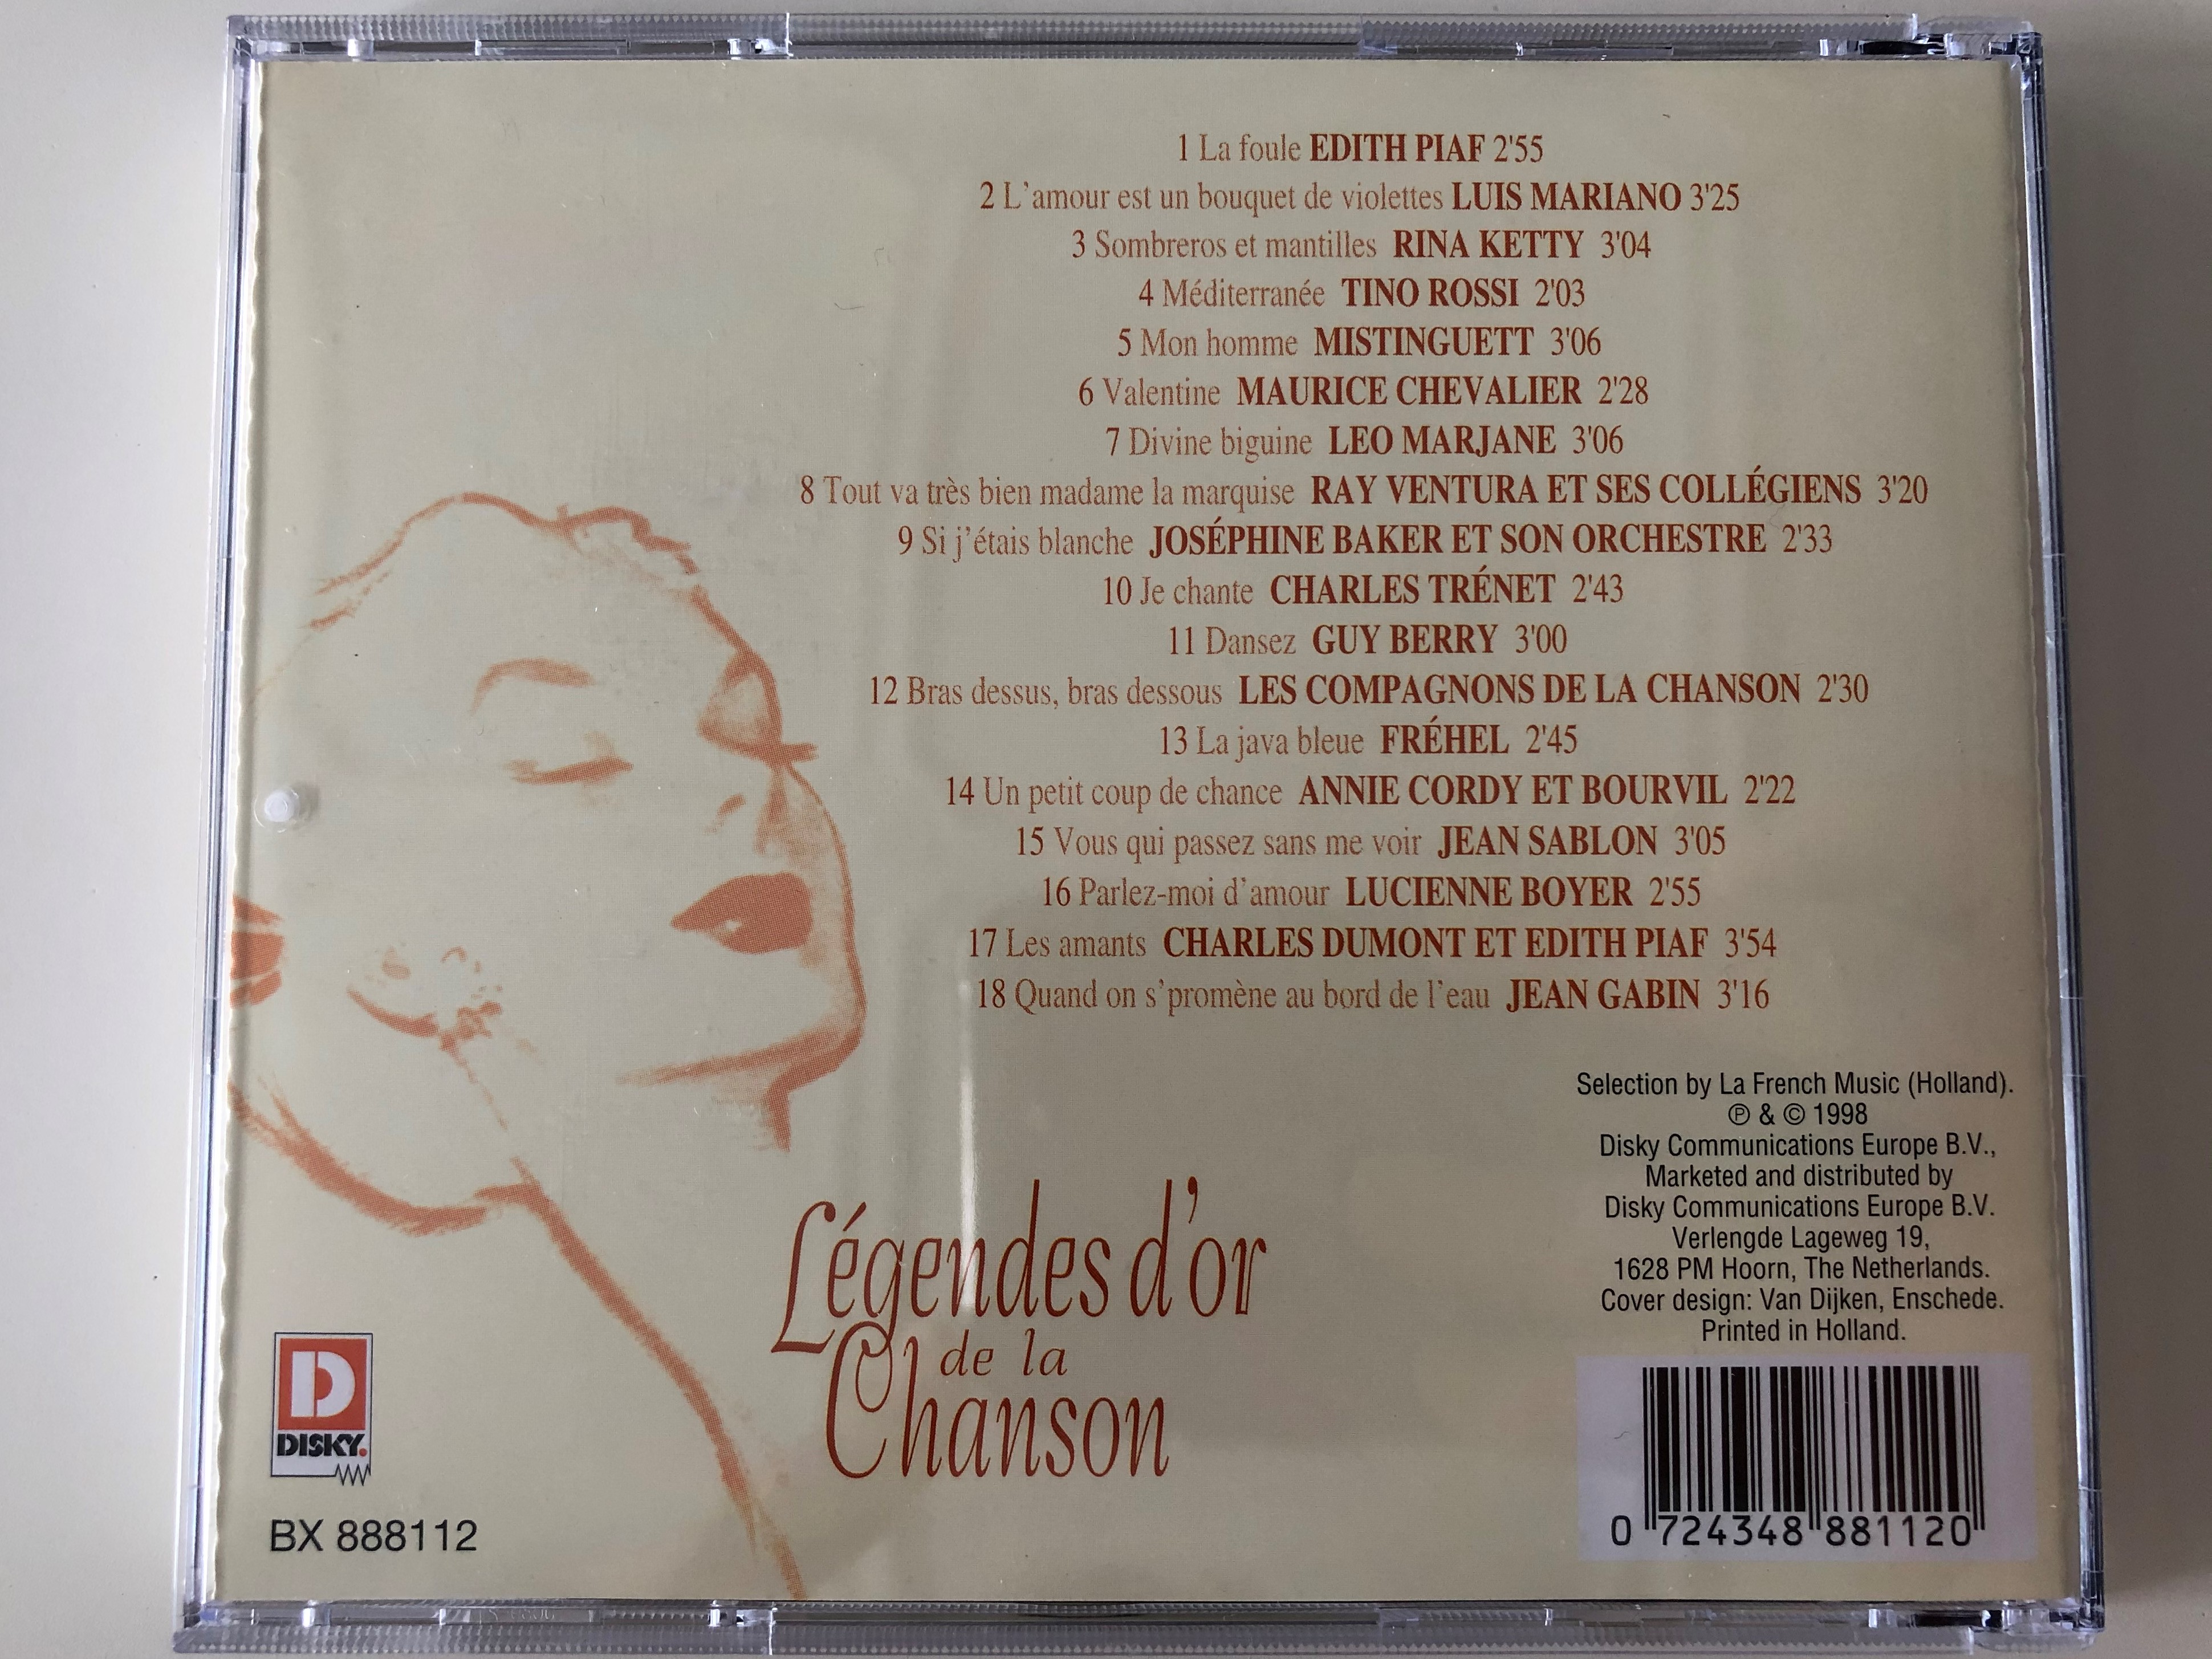 l-gendes-d-or-de-la-chanson-edith-piaf-tino-rossi-charles-trenet-jean-gabin-guy-berry-cd-1-disky-audio-cd-1998-bx-888112-4-.jpg